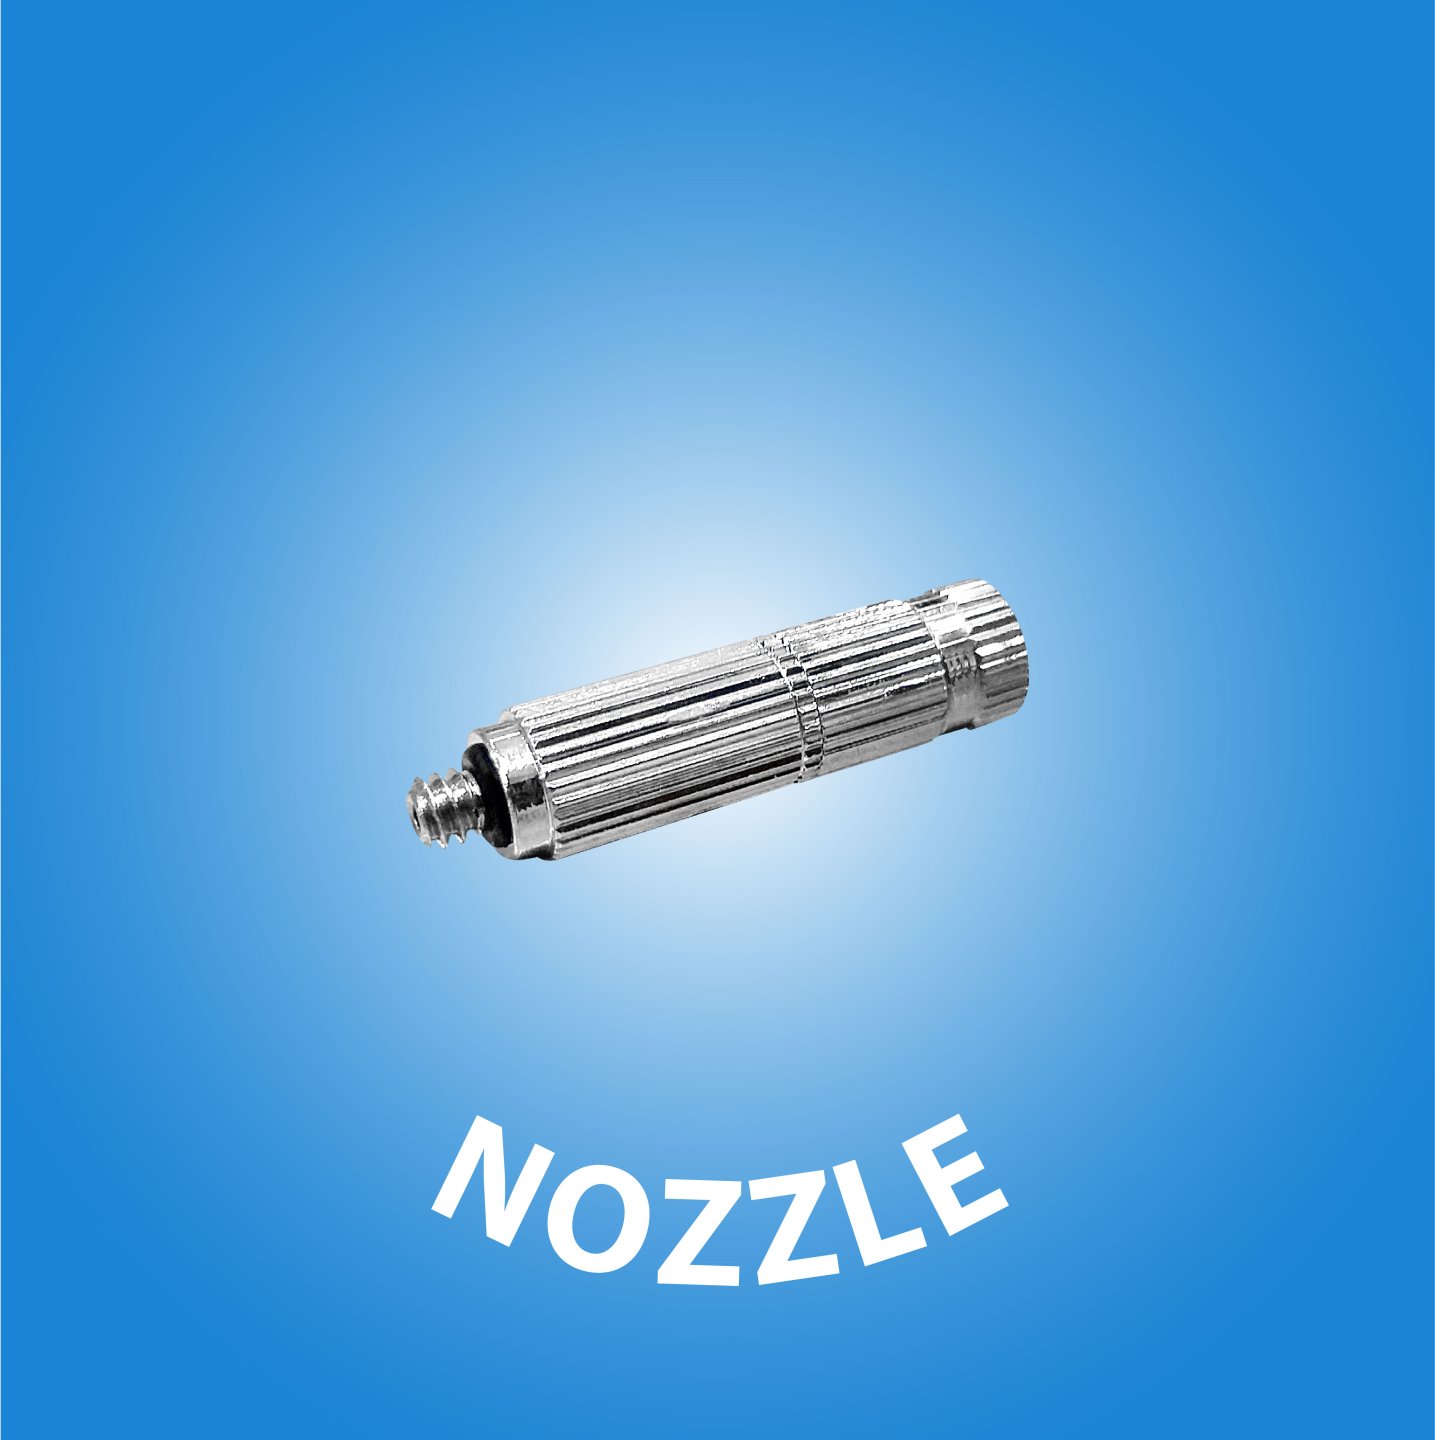  Nozzle cover kategori website 47